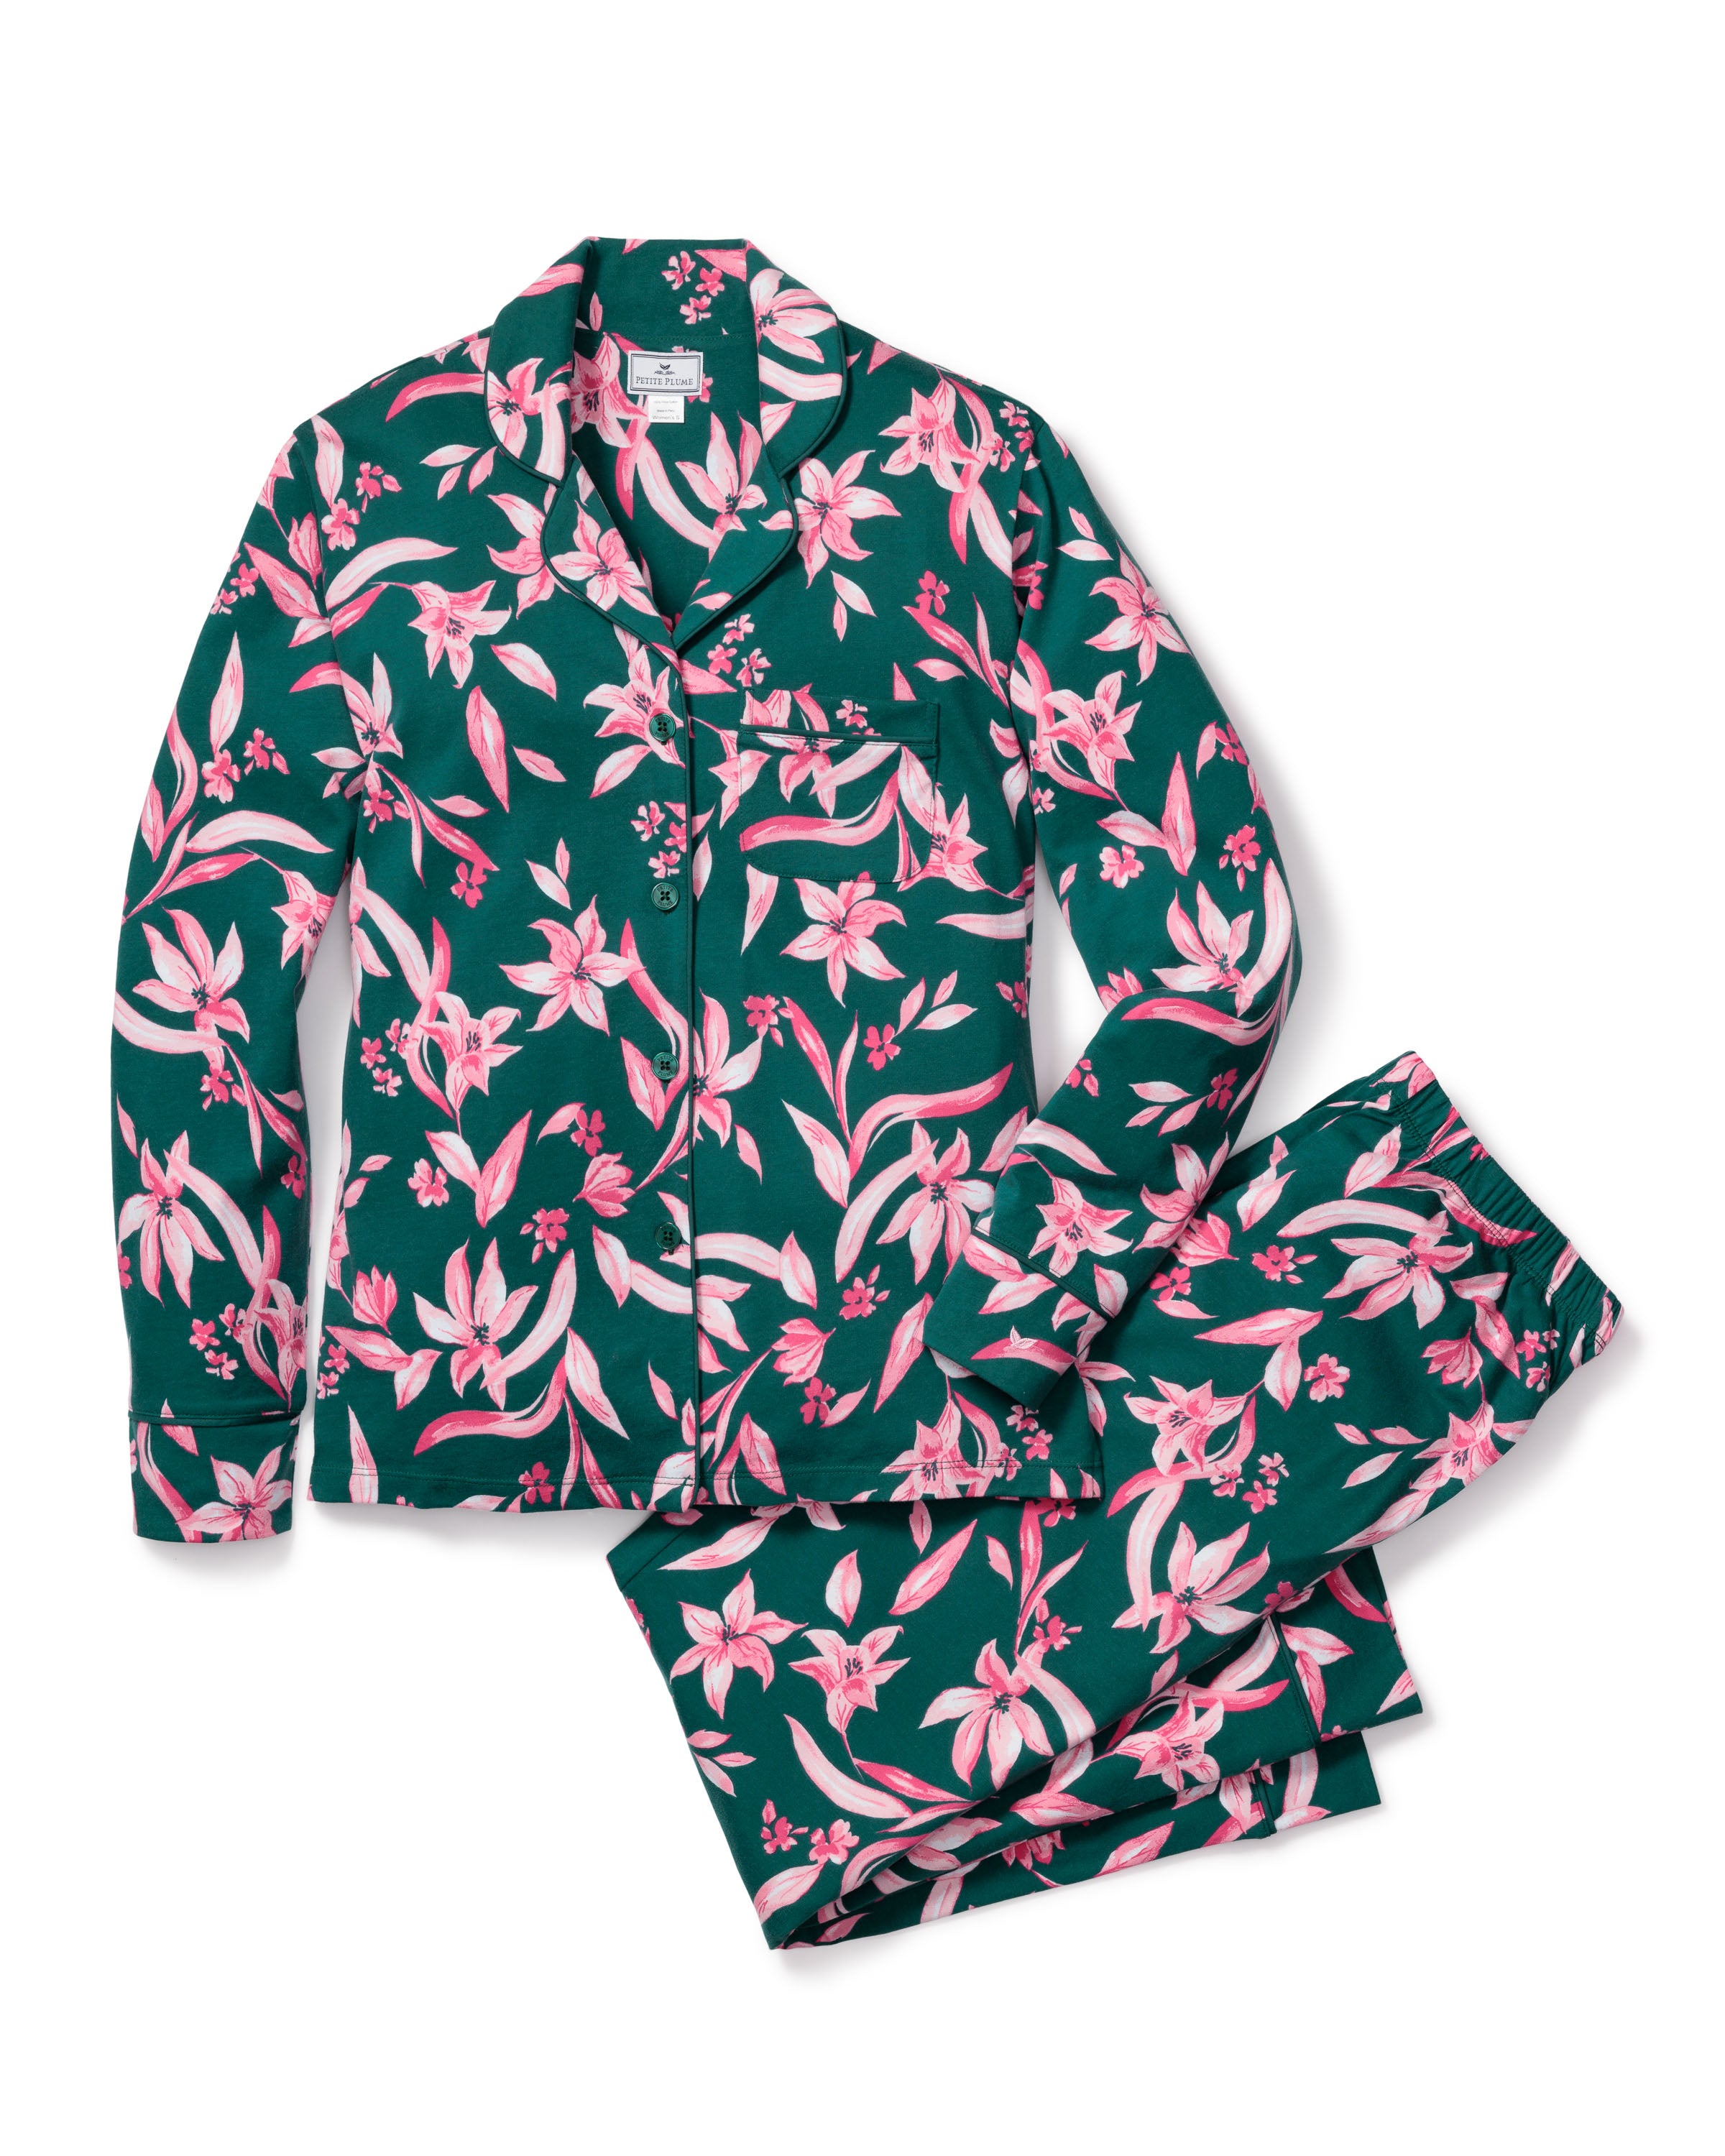 Women's Pima Pajama Set in Amalfi Floral